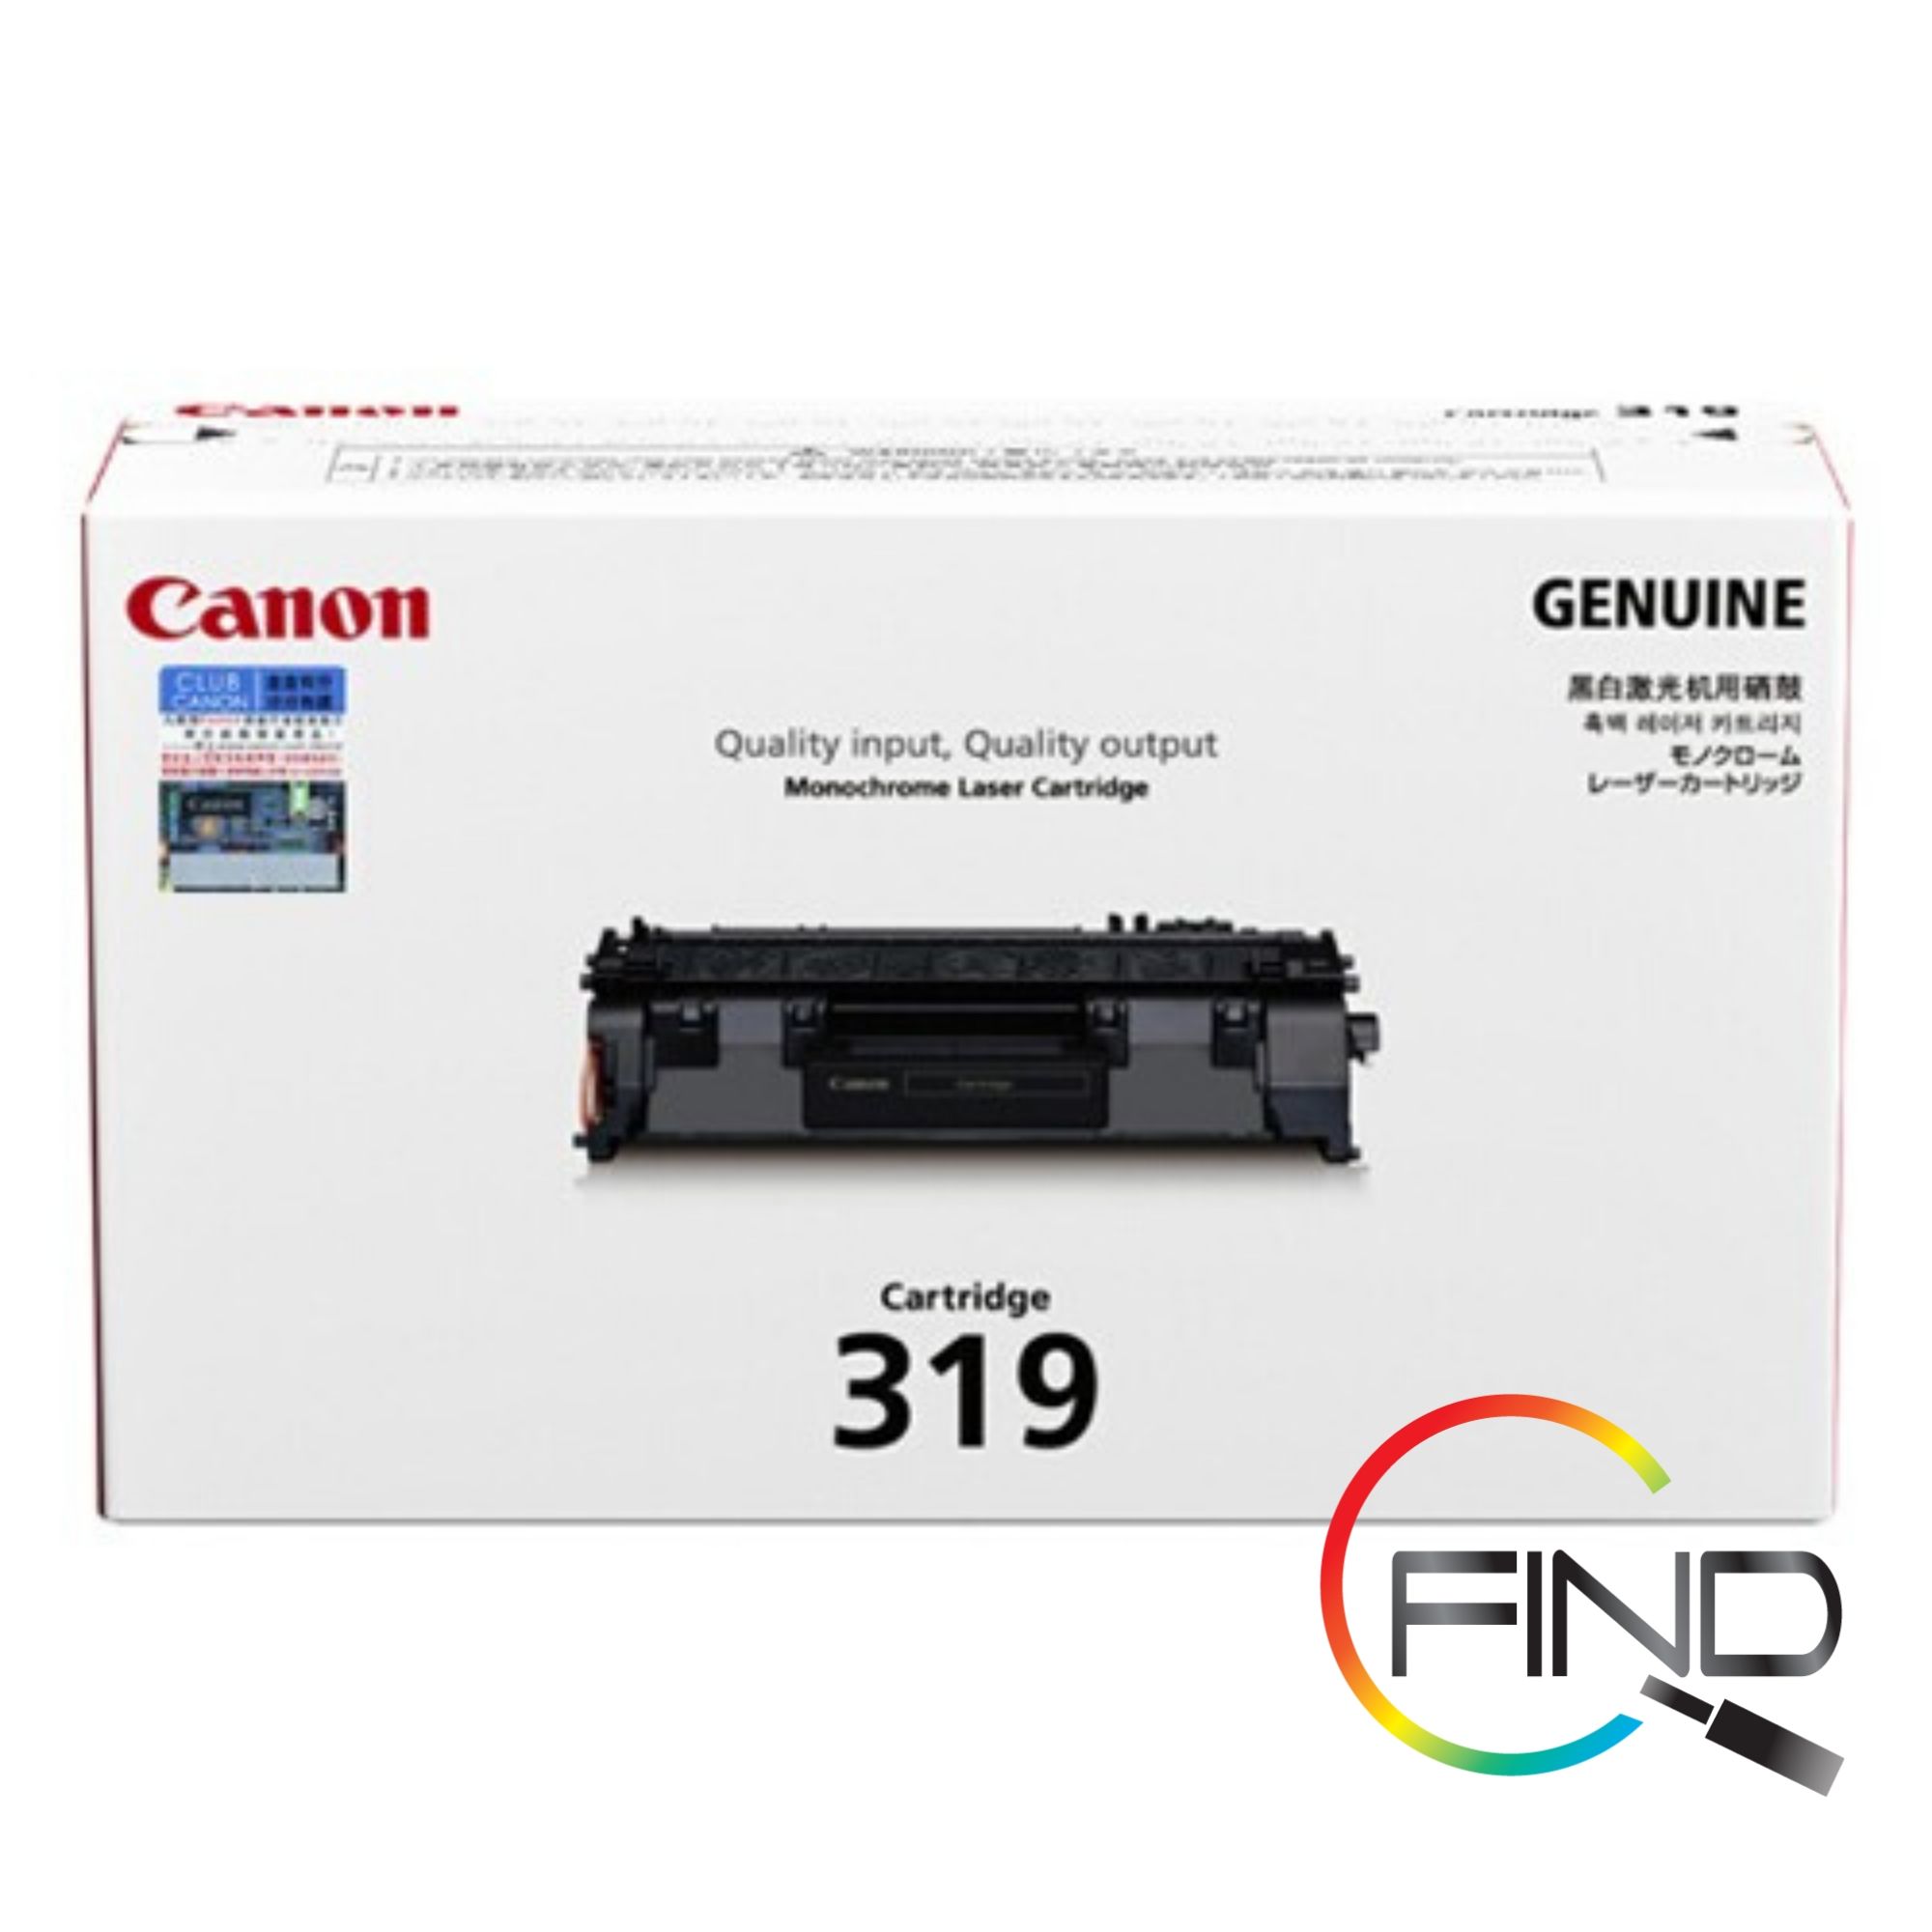 Canon Cart 319 Toner for LBP251dw/LBP253x/MF416dw/MF6180dw Printer